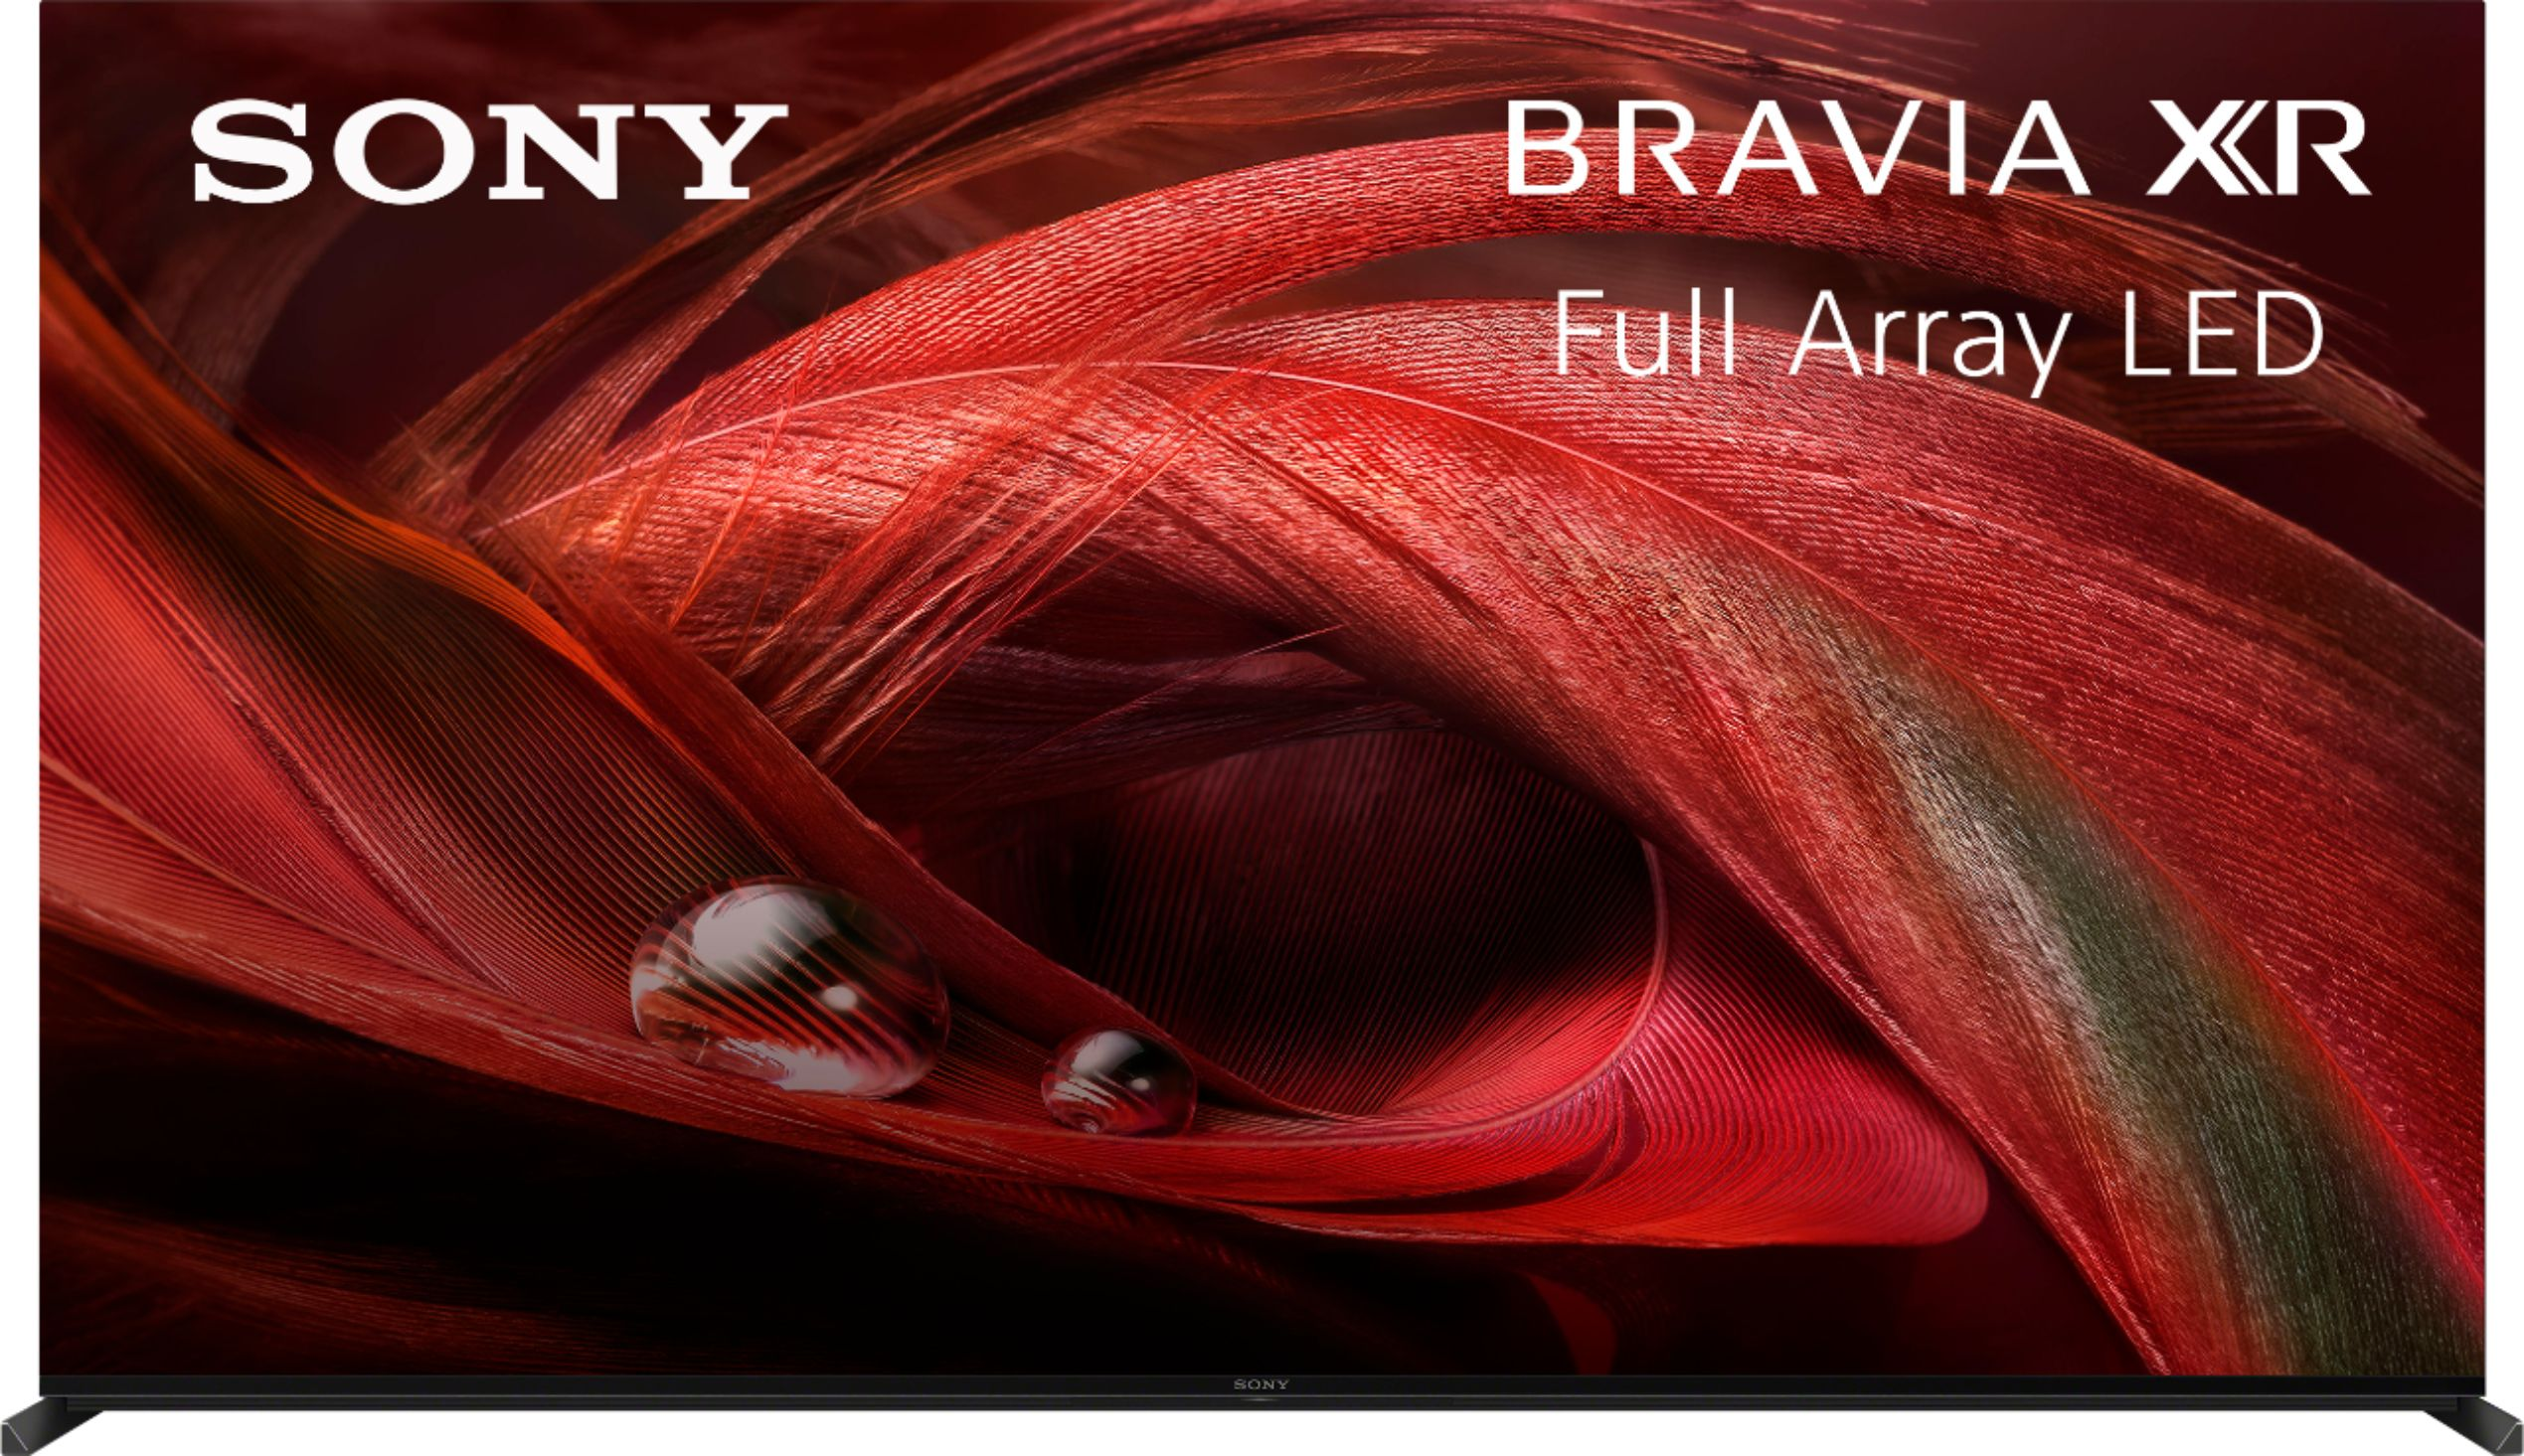 Sony 75" class BRAVIA XR X95J 4K UHD Smart Google TV XR75X95J - Best Buy $2299.99